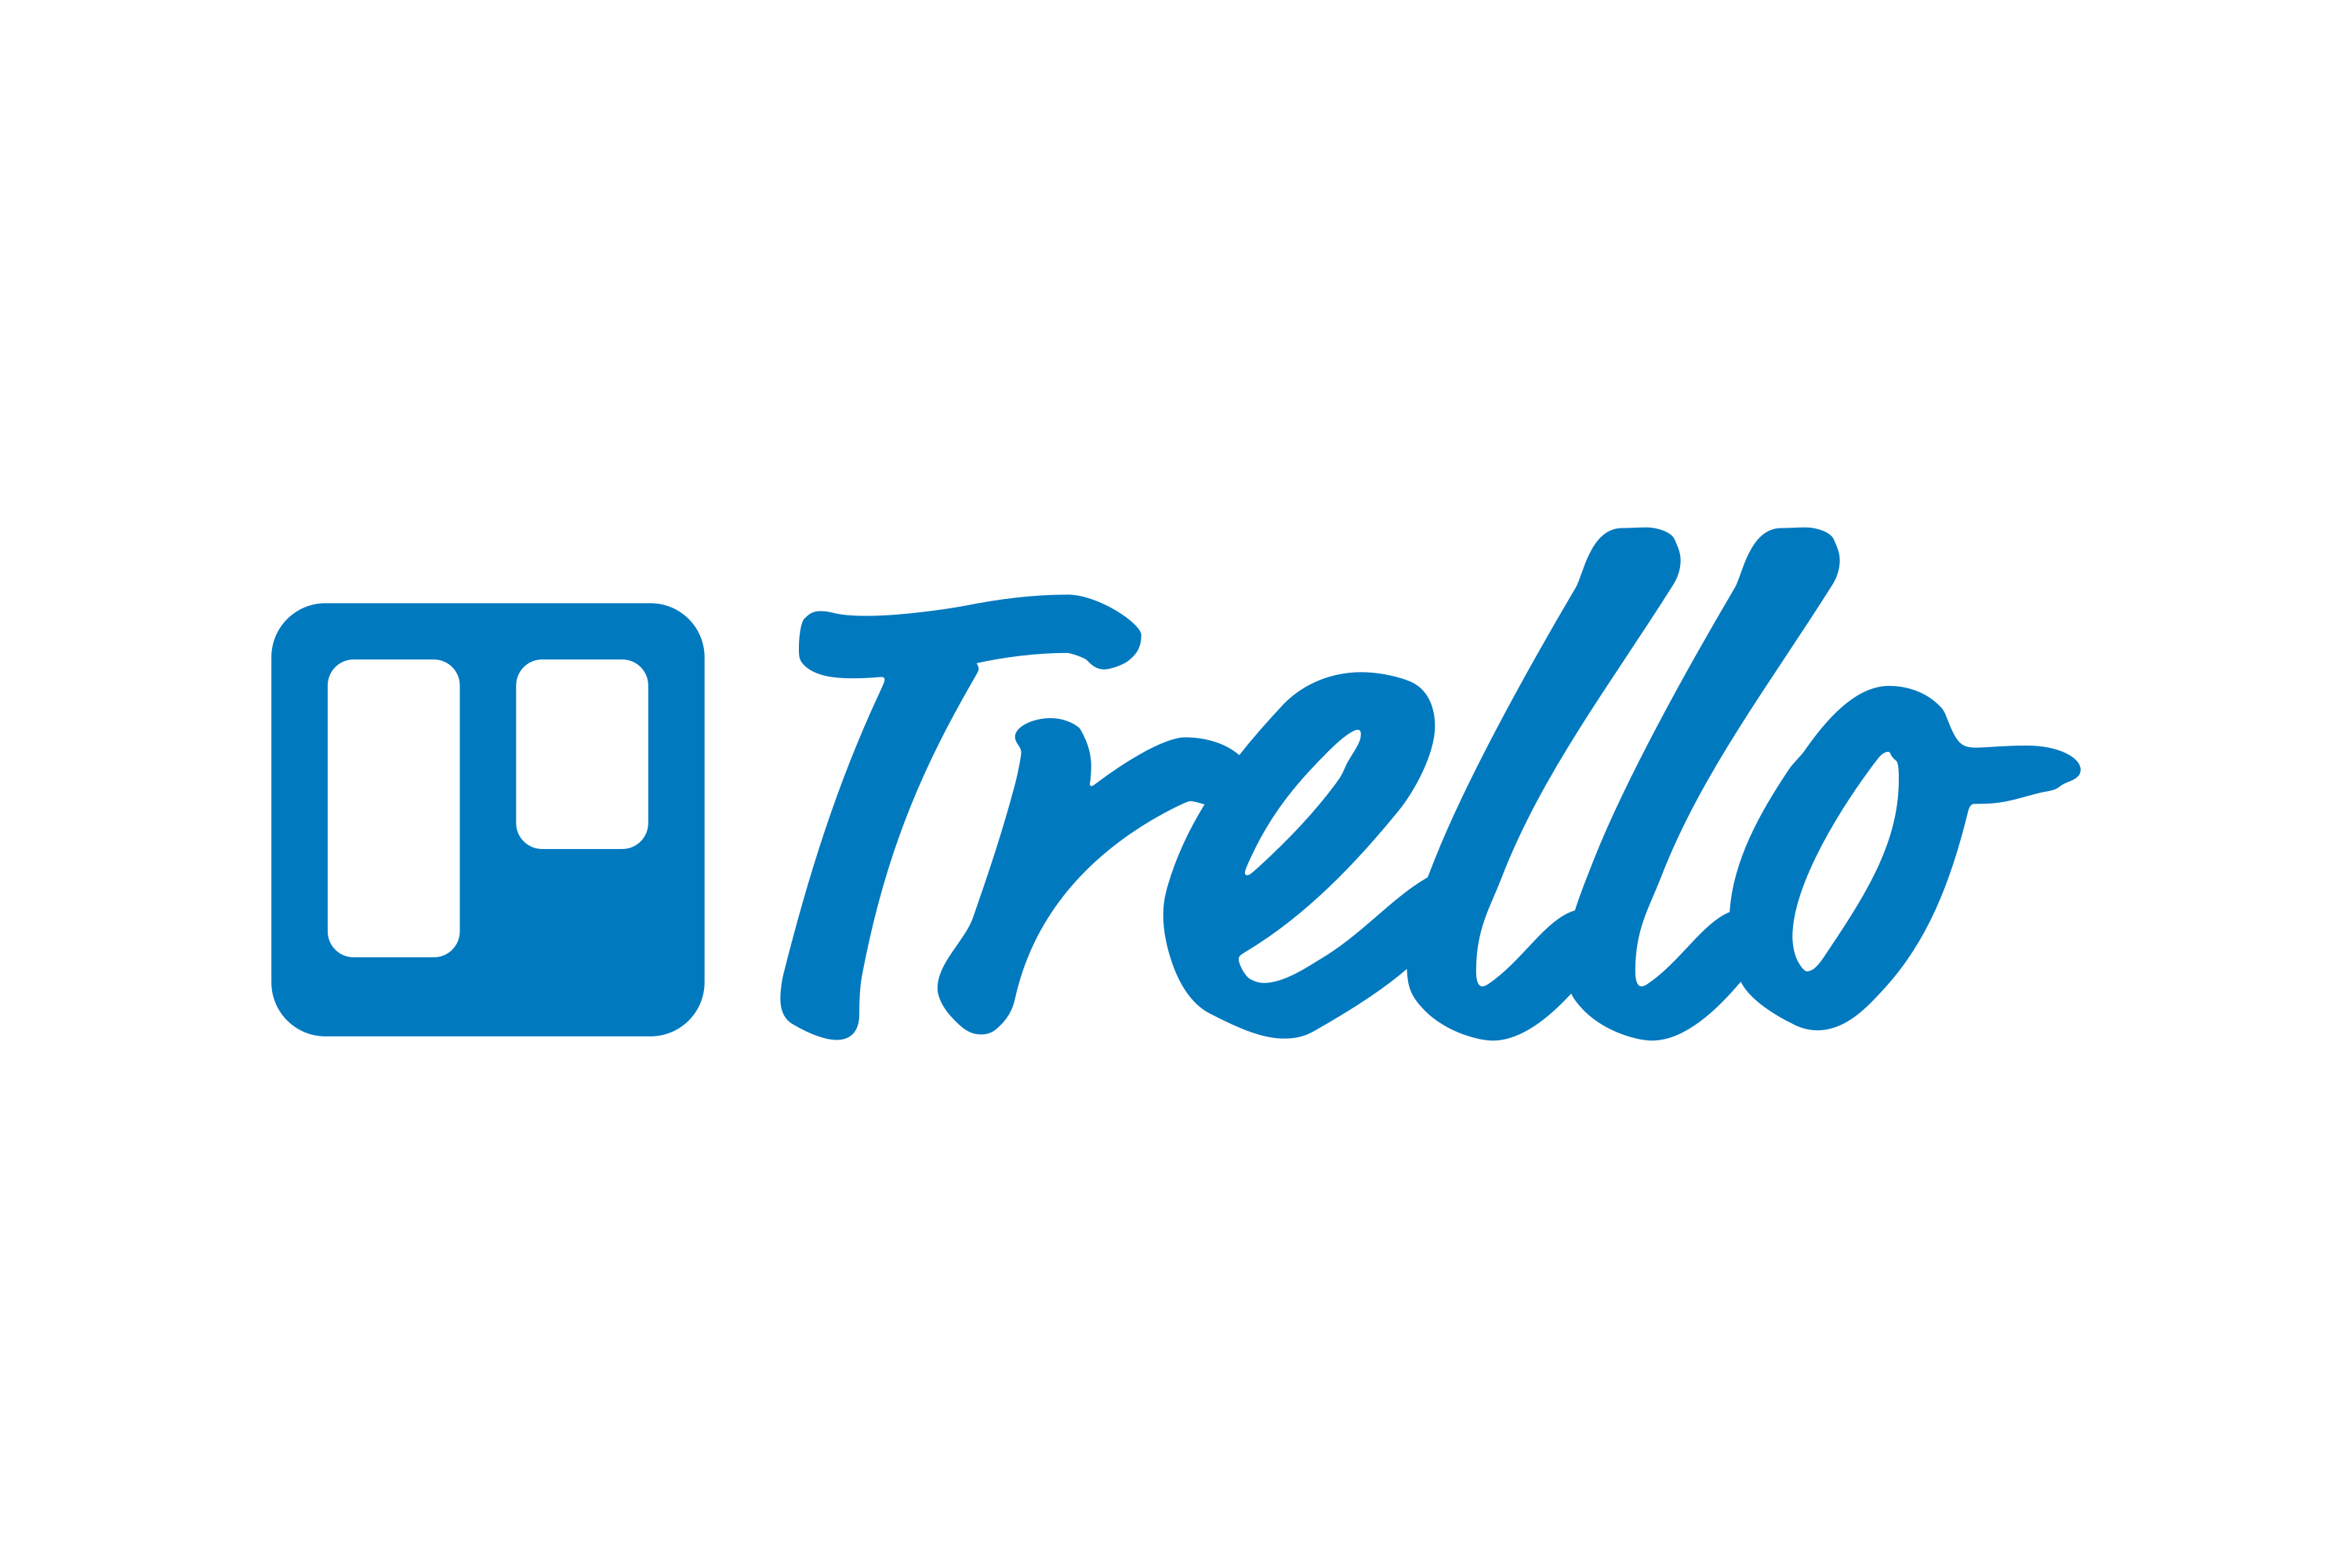 Download Trello Logo in SVG Vector or PNG File Format - Logo.wine